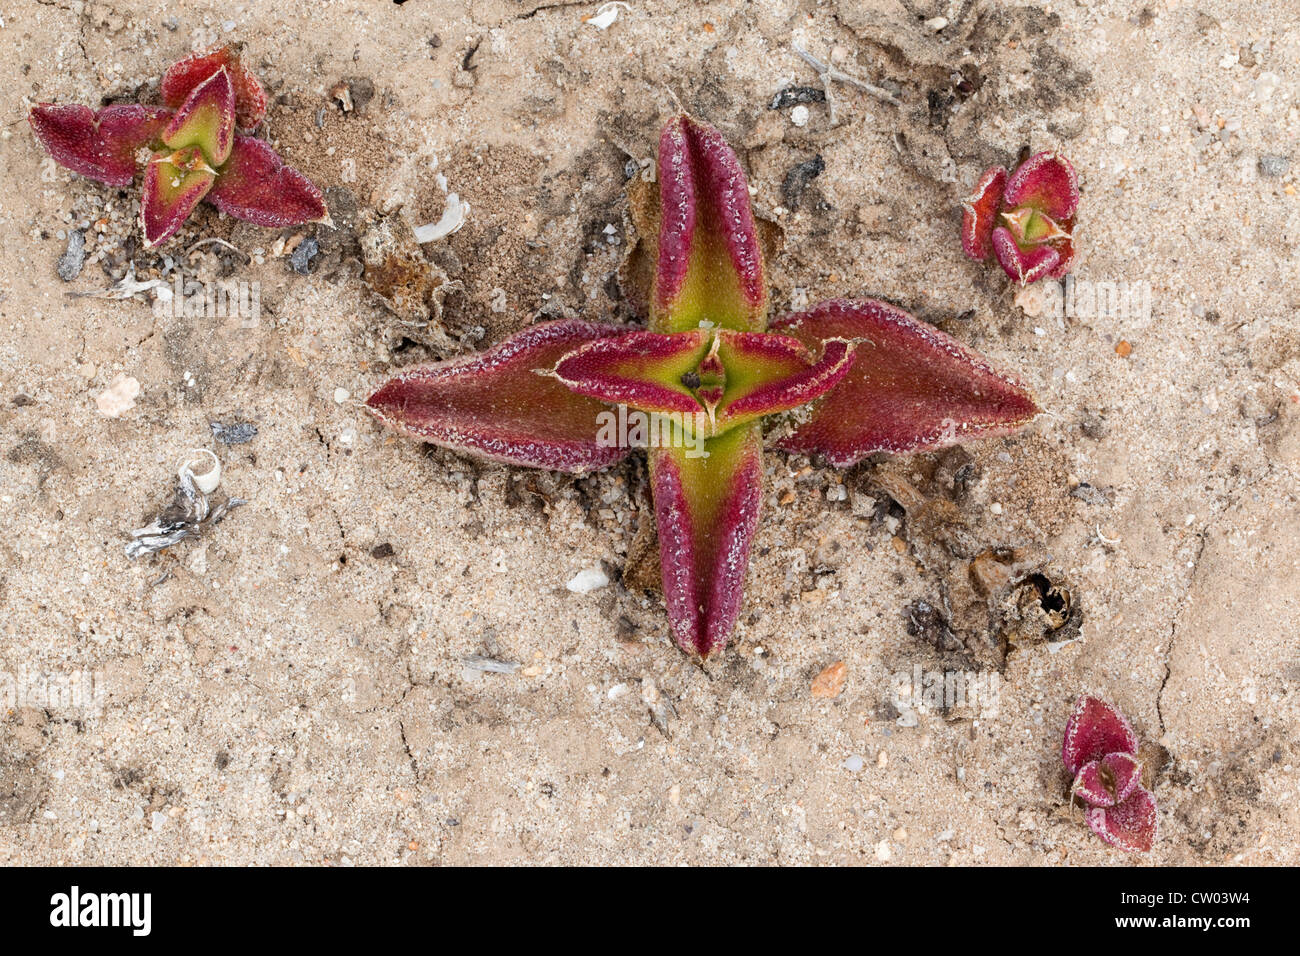 Mesembryanthemum crystallinum, Namaqualand coast, Northern Cape, South Africa Stock Photo